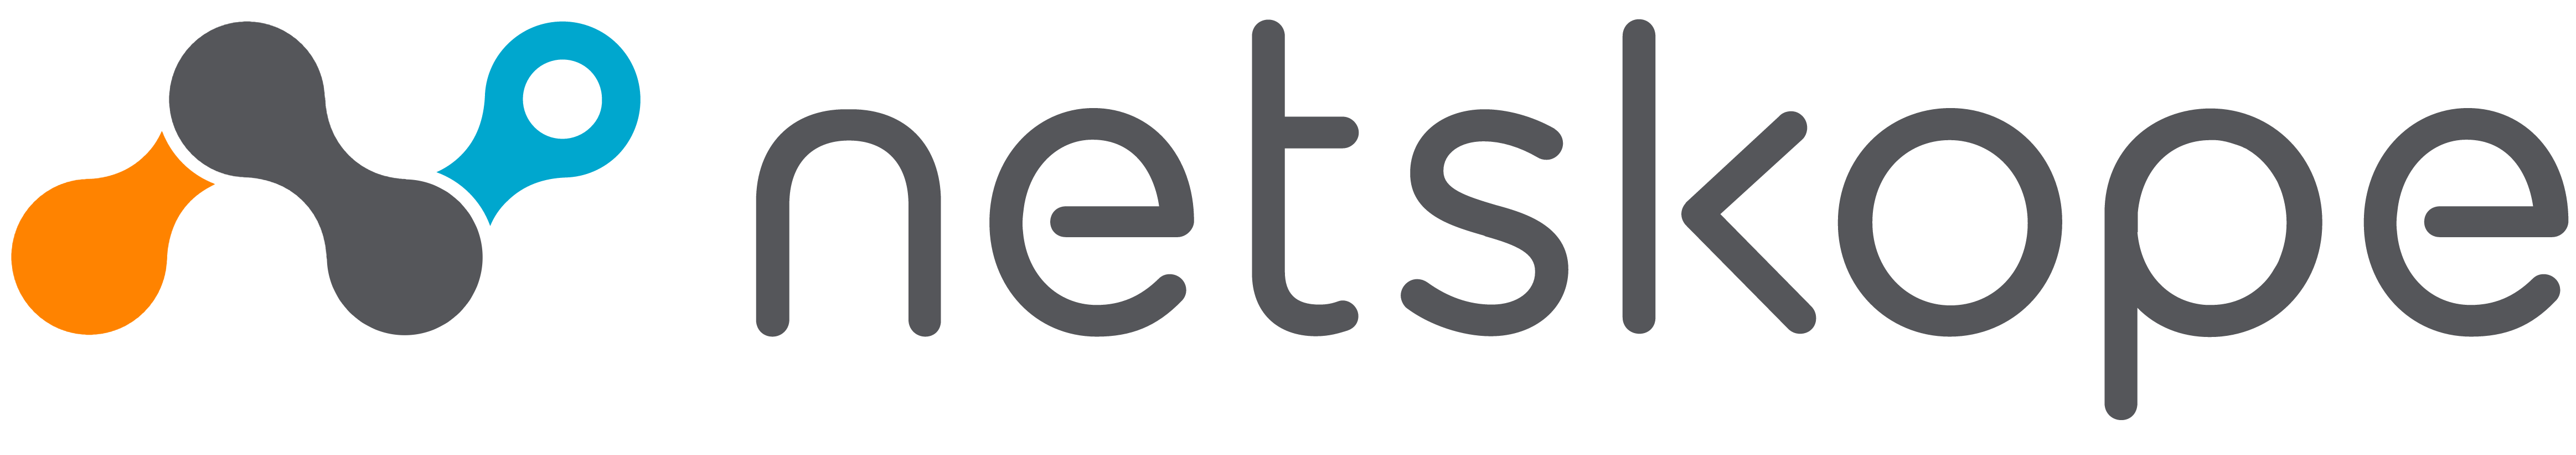 Netskope logo PNG